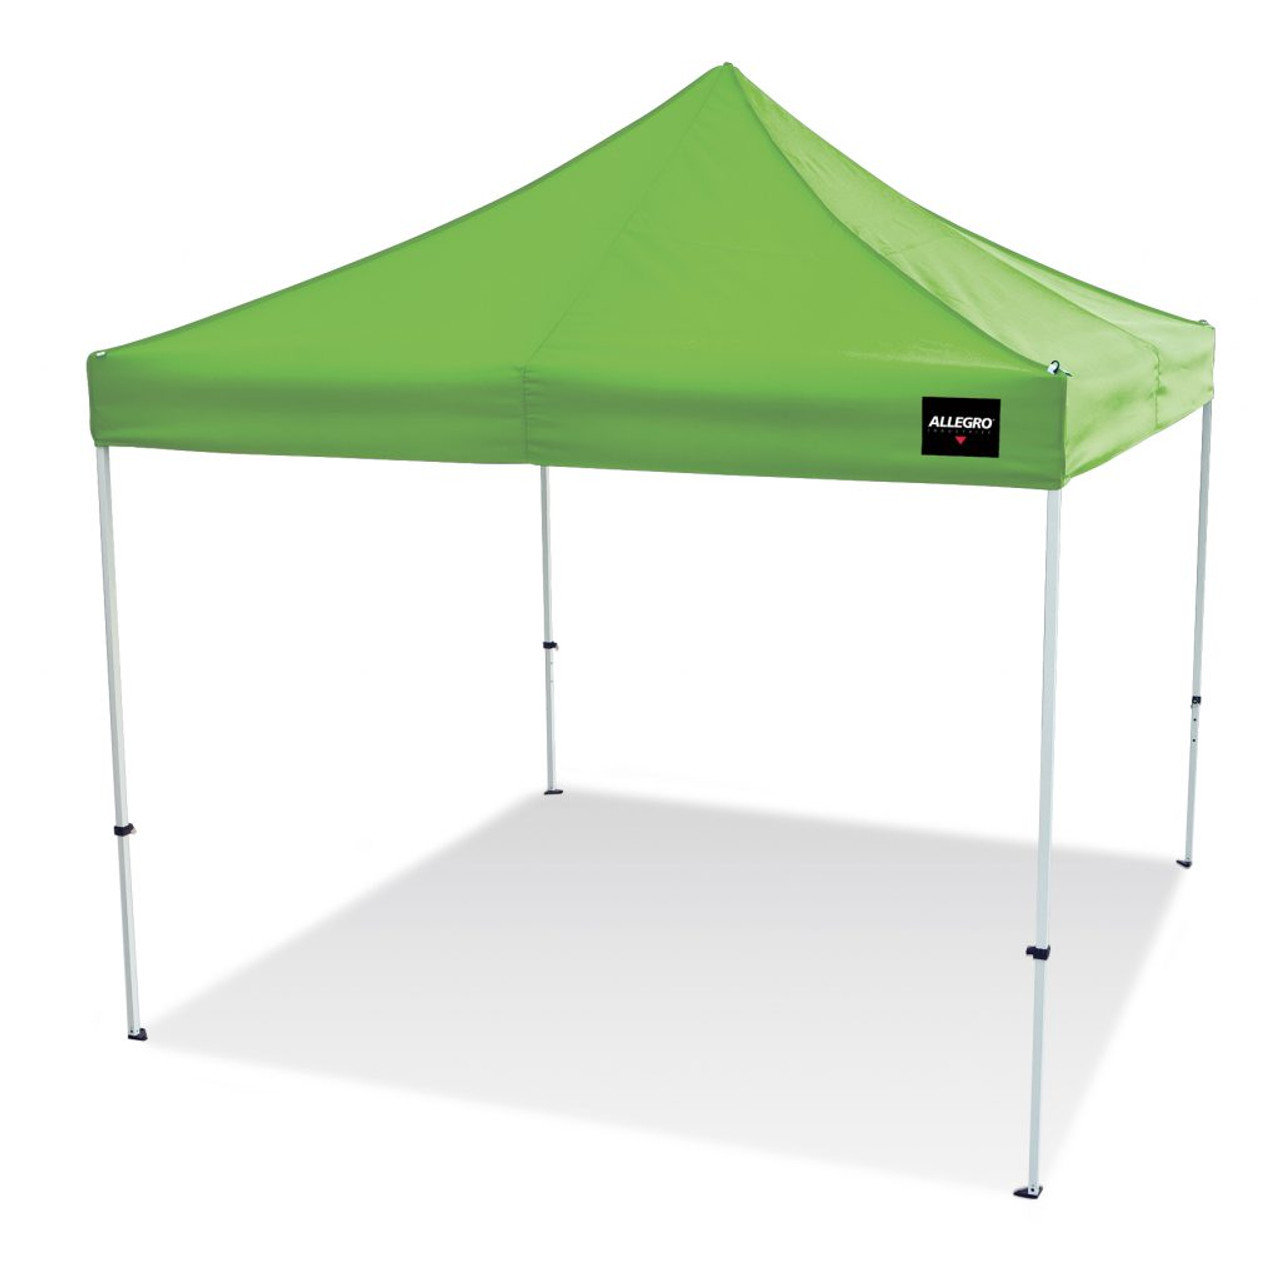 Utility Canopy Shelter Hi Viz Green Allegro 9403-10